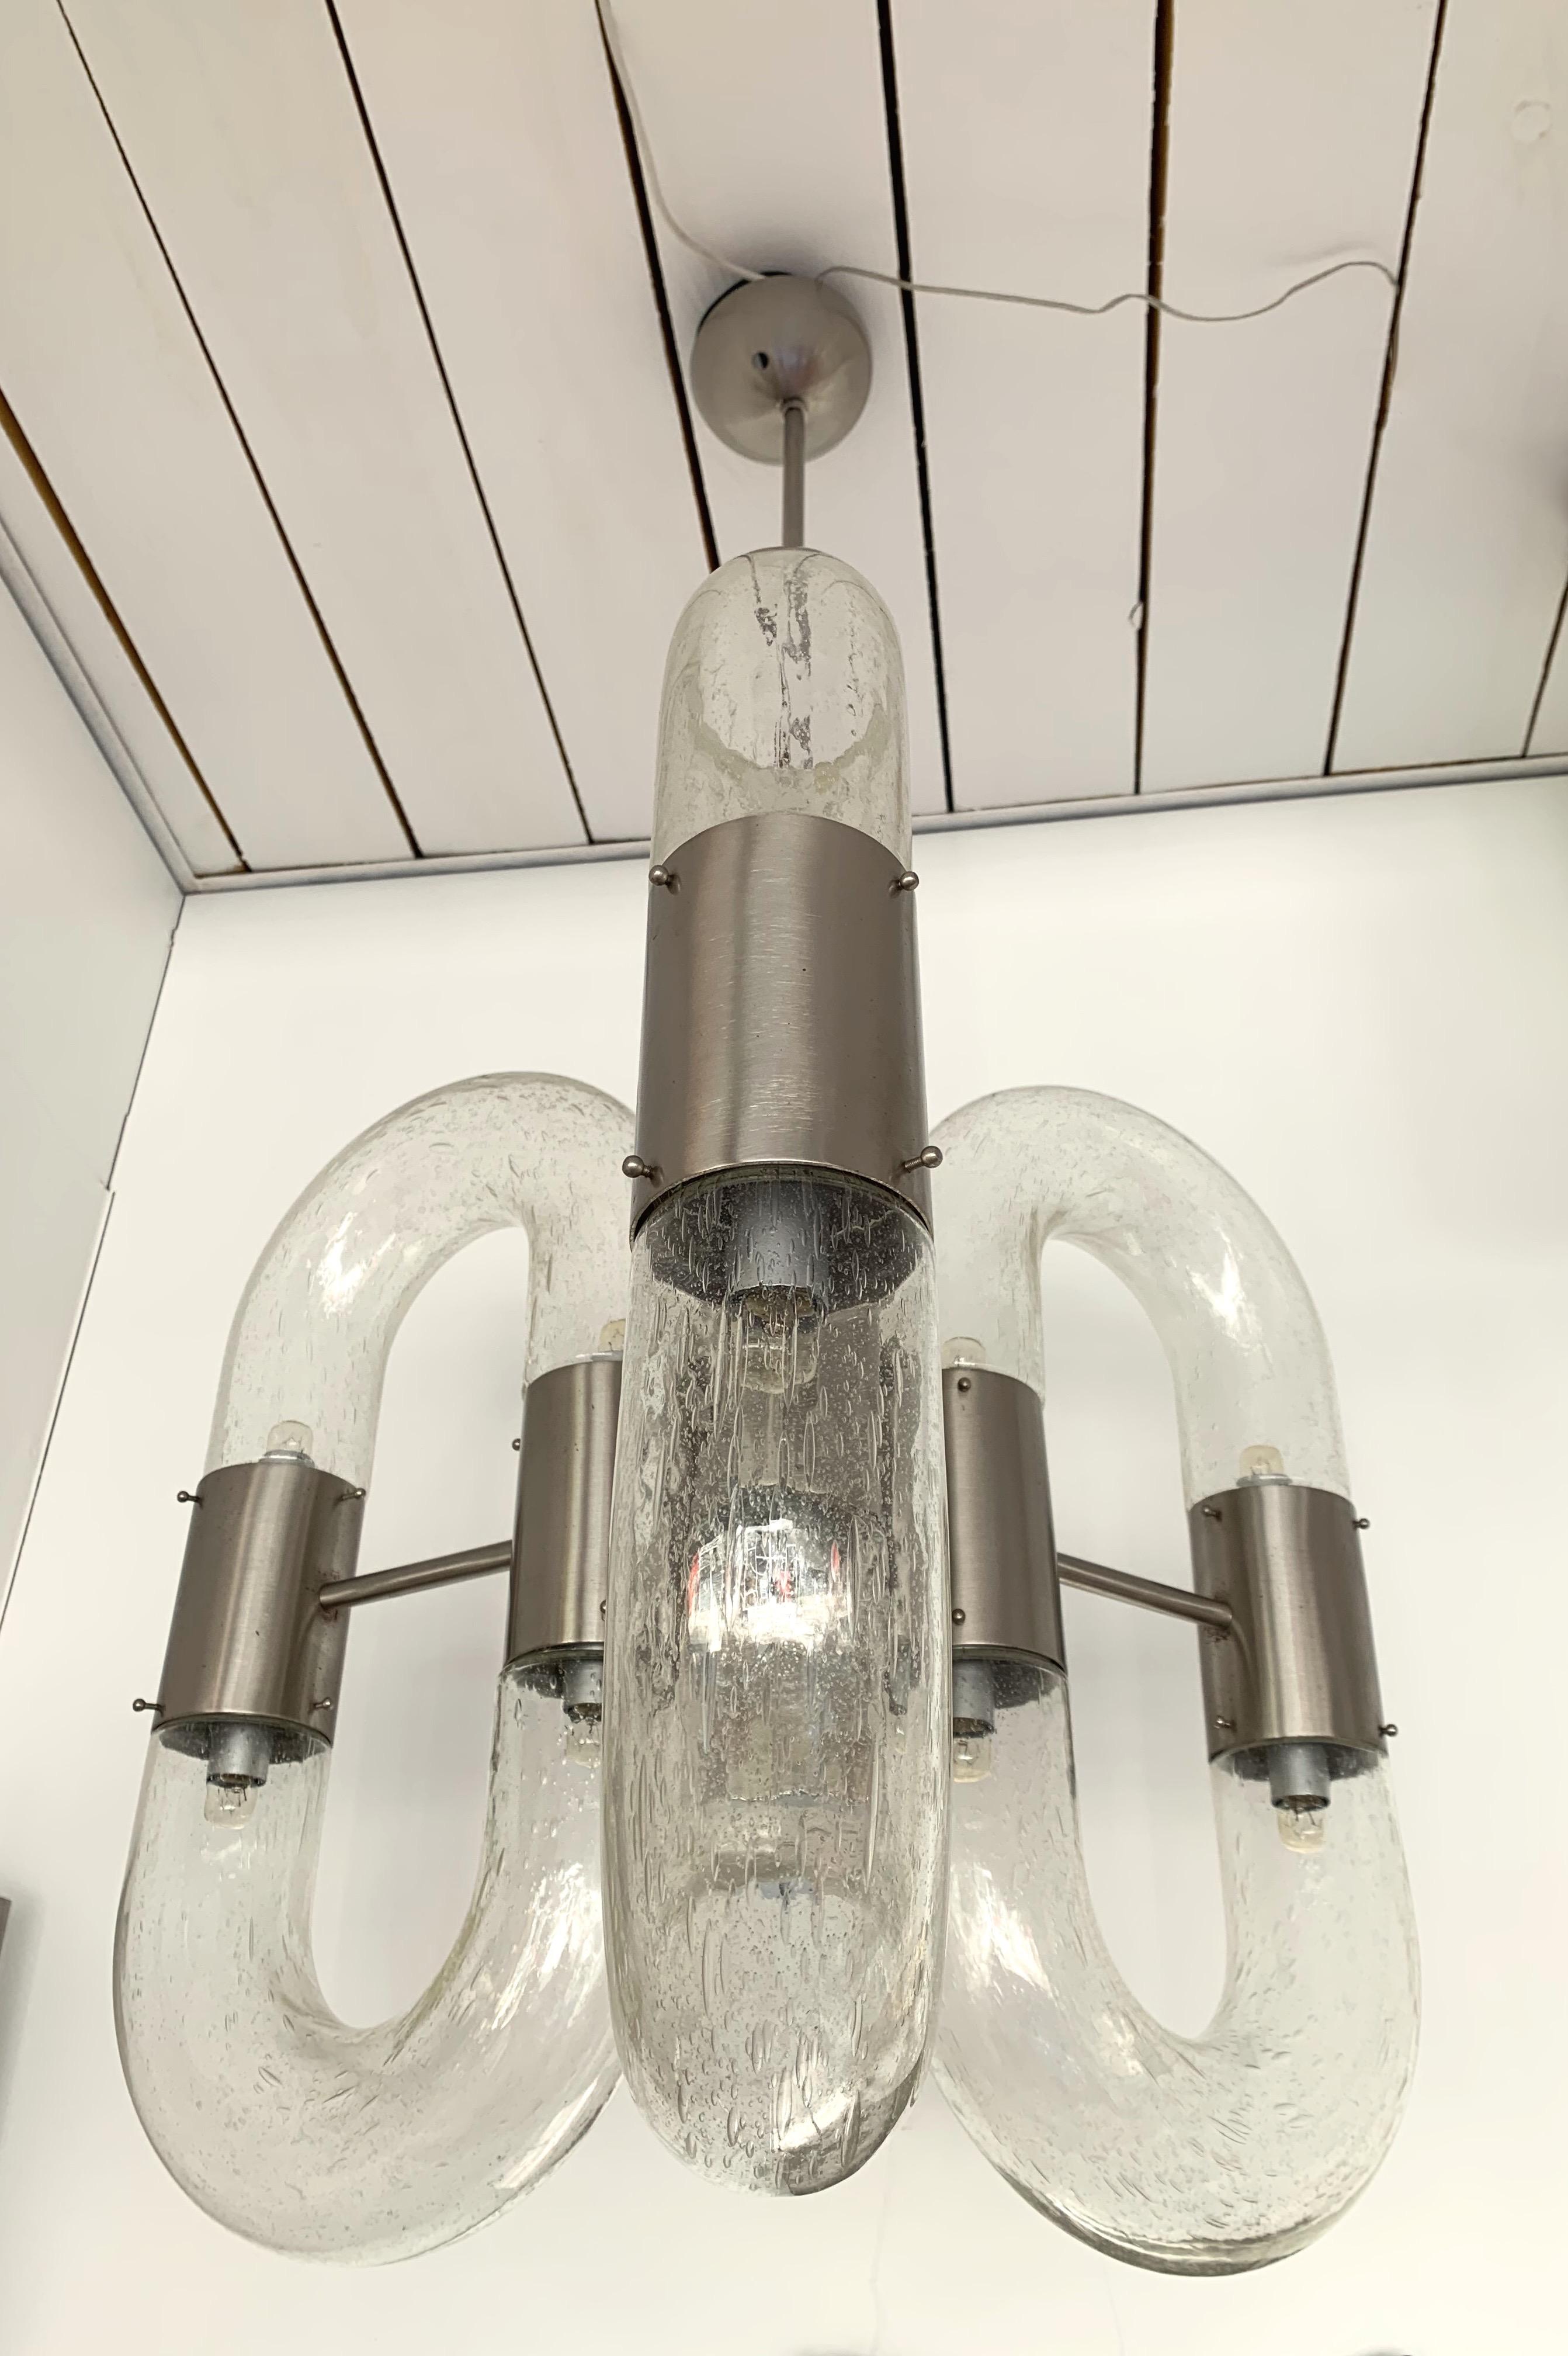 Three rings model of chandelier or ceiling pendant light by Aldo Nason for Mazzega, blown bubble Murano glass, nickeled metal structure. Famous design like Carlo Nason, Venini, Vistosi, La Murrina, Seguso.